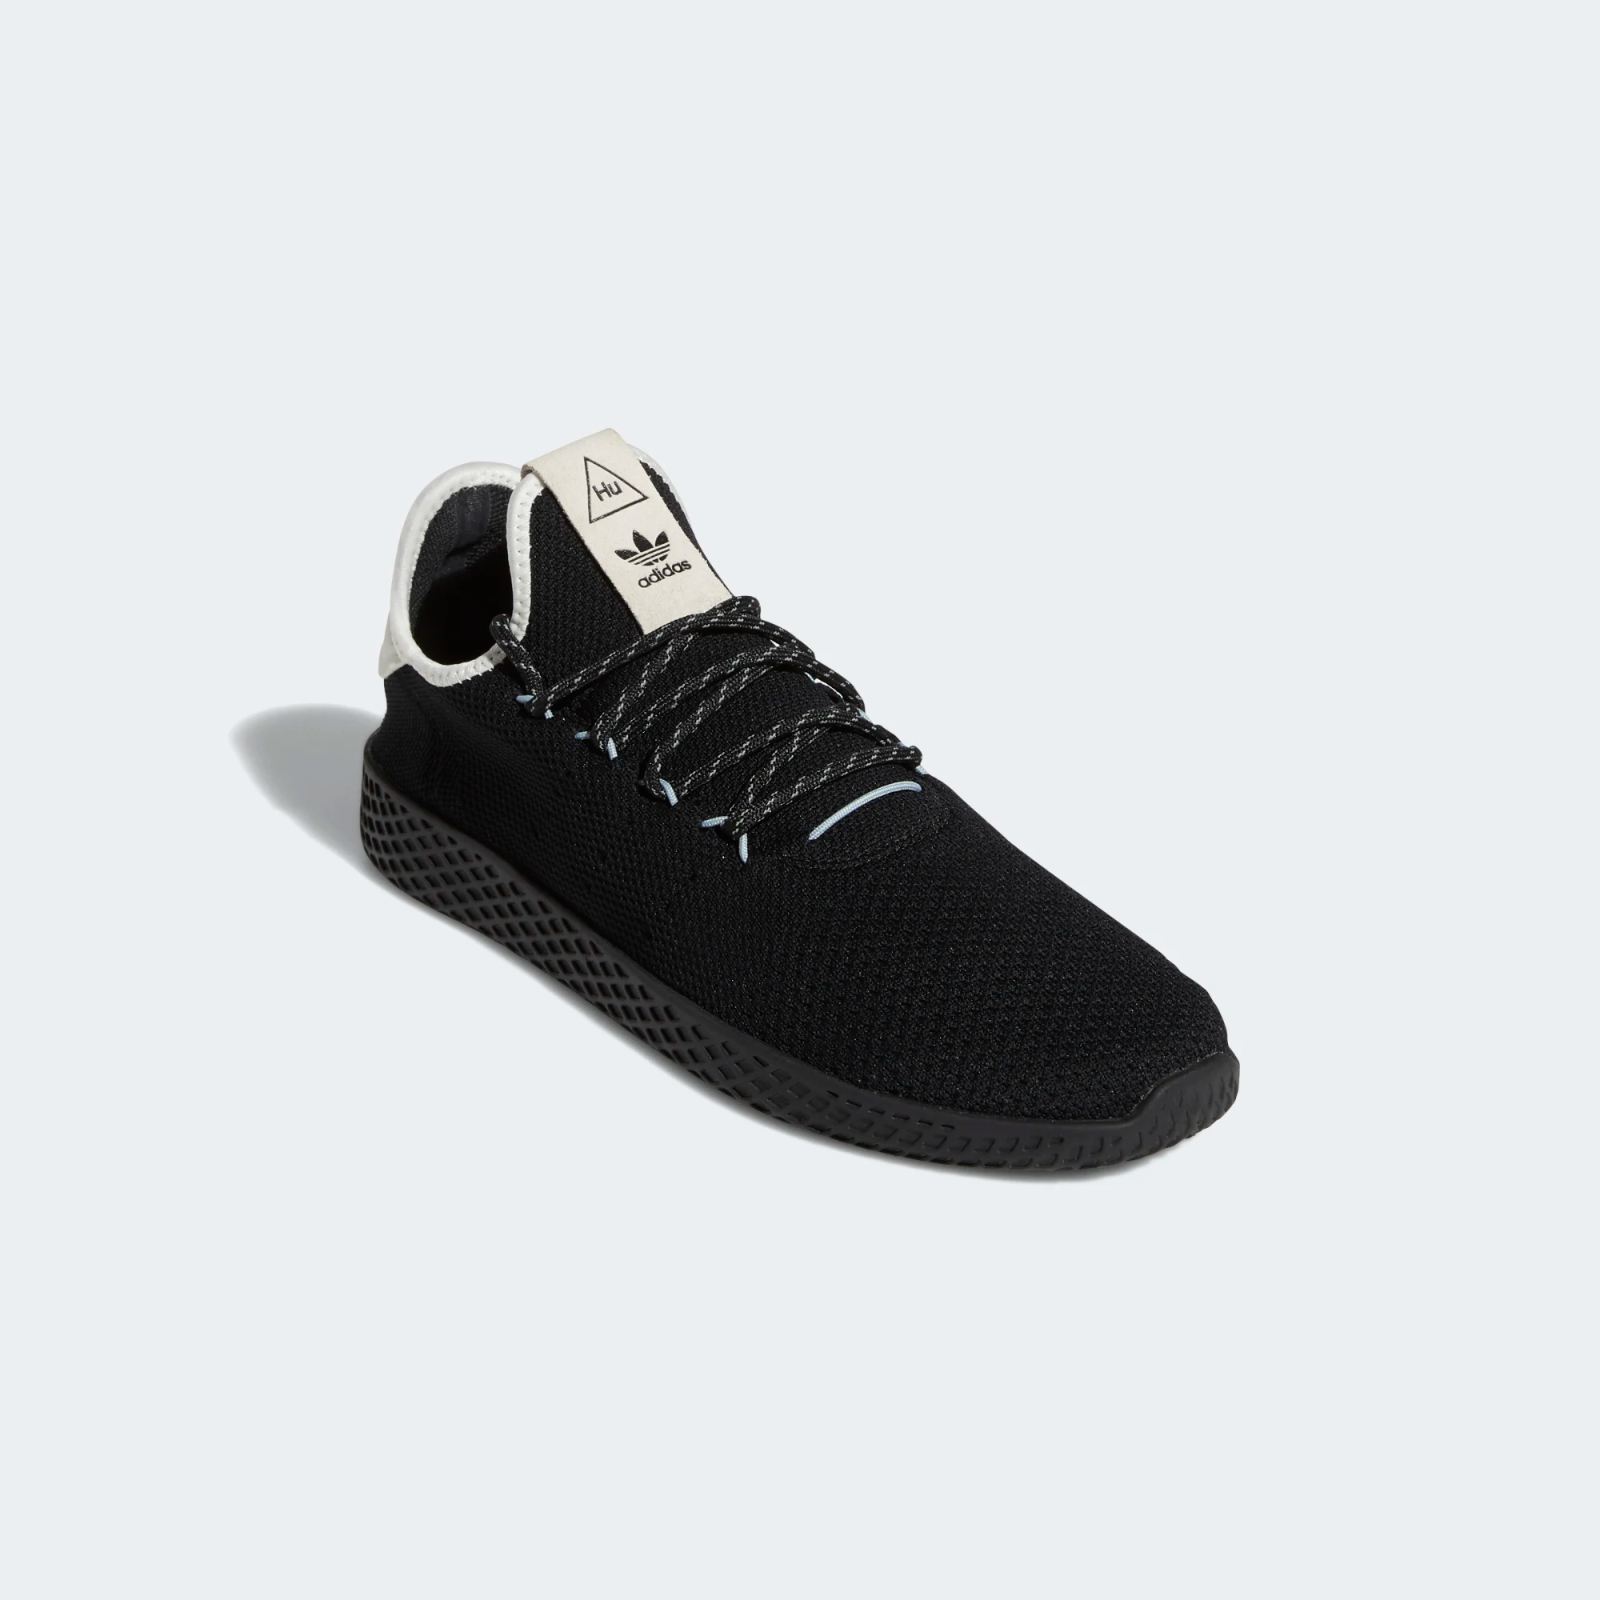 adidas Mens Pharrell Williams Tennis Hu Shoes in Black and | eBay